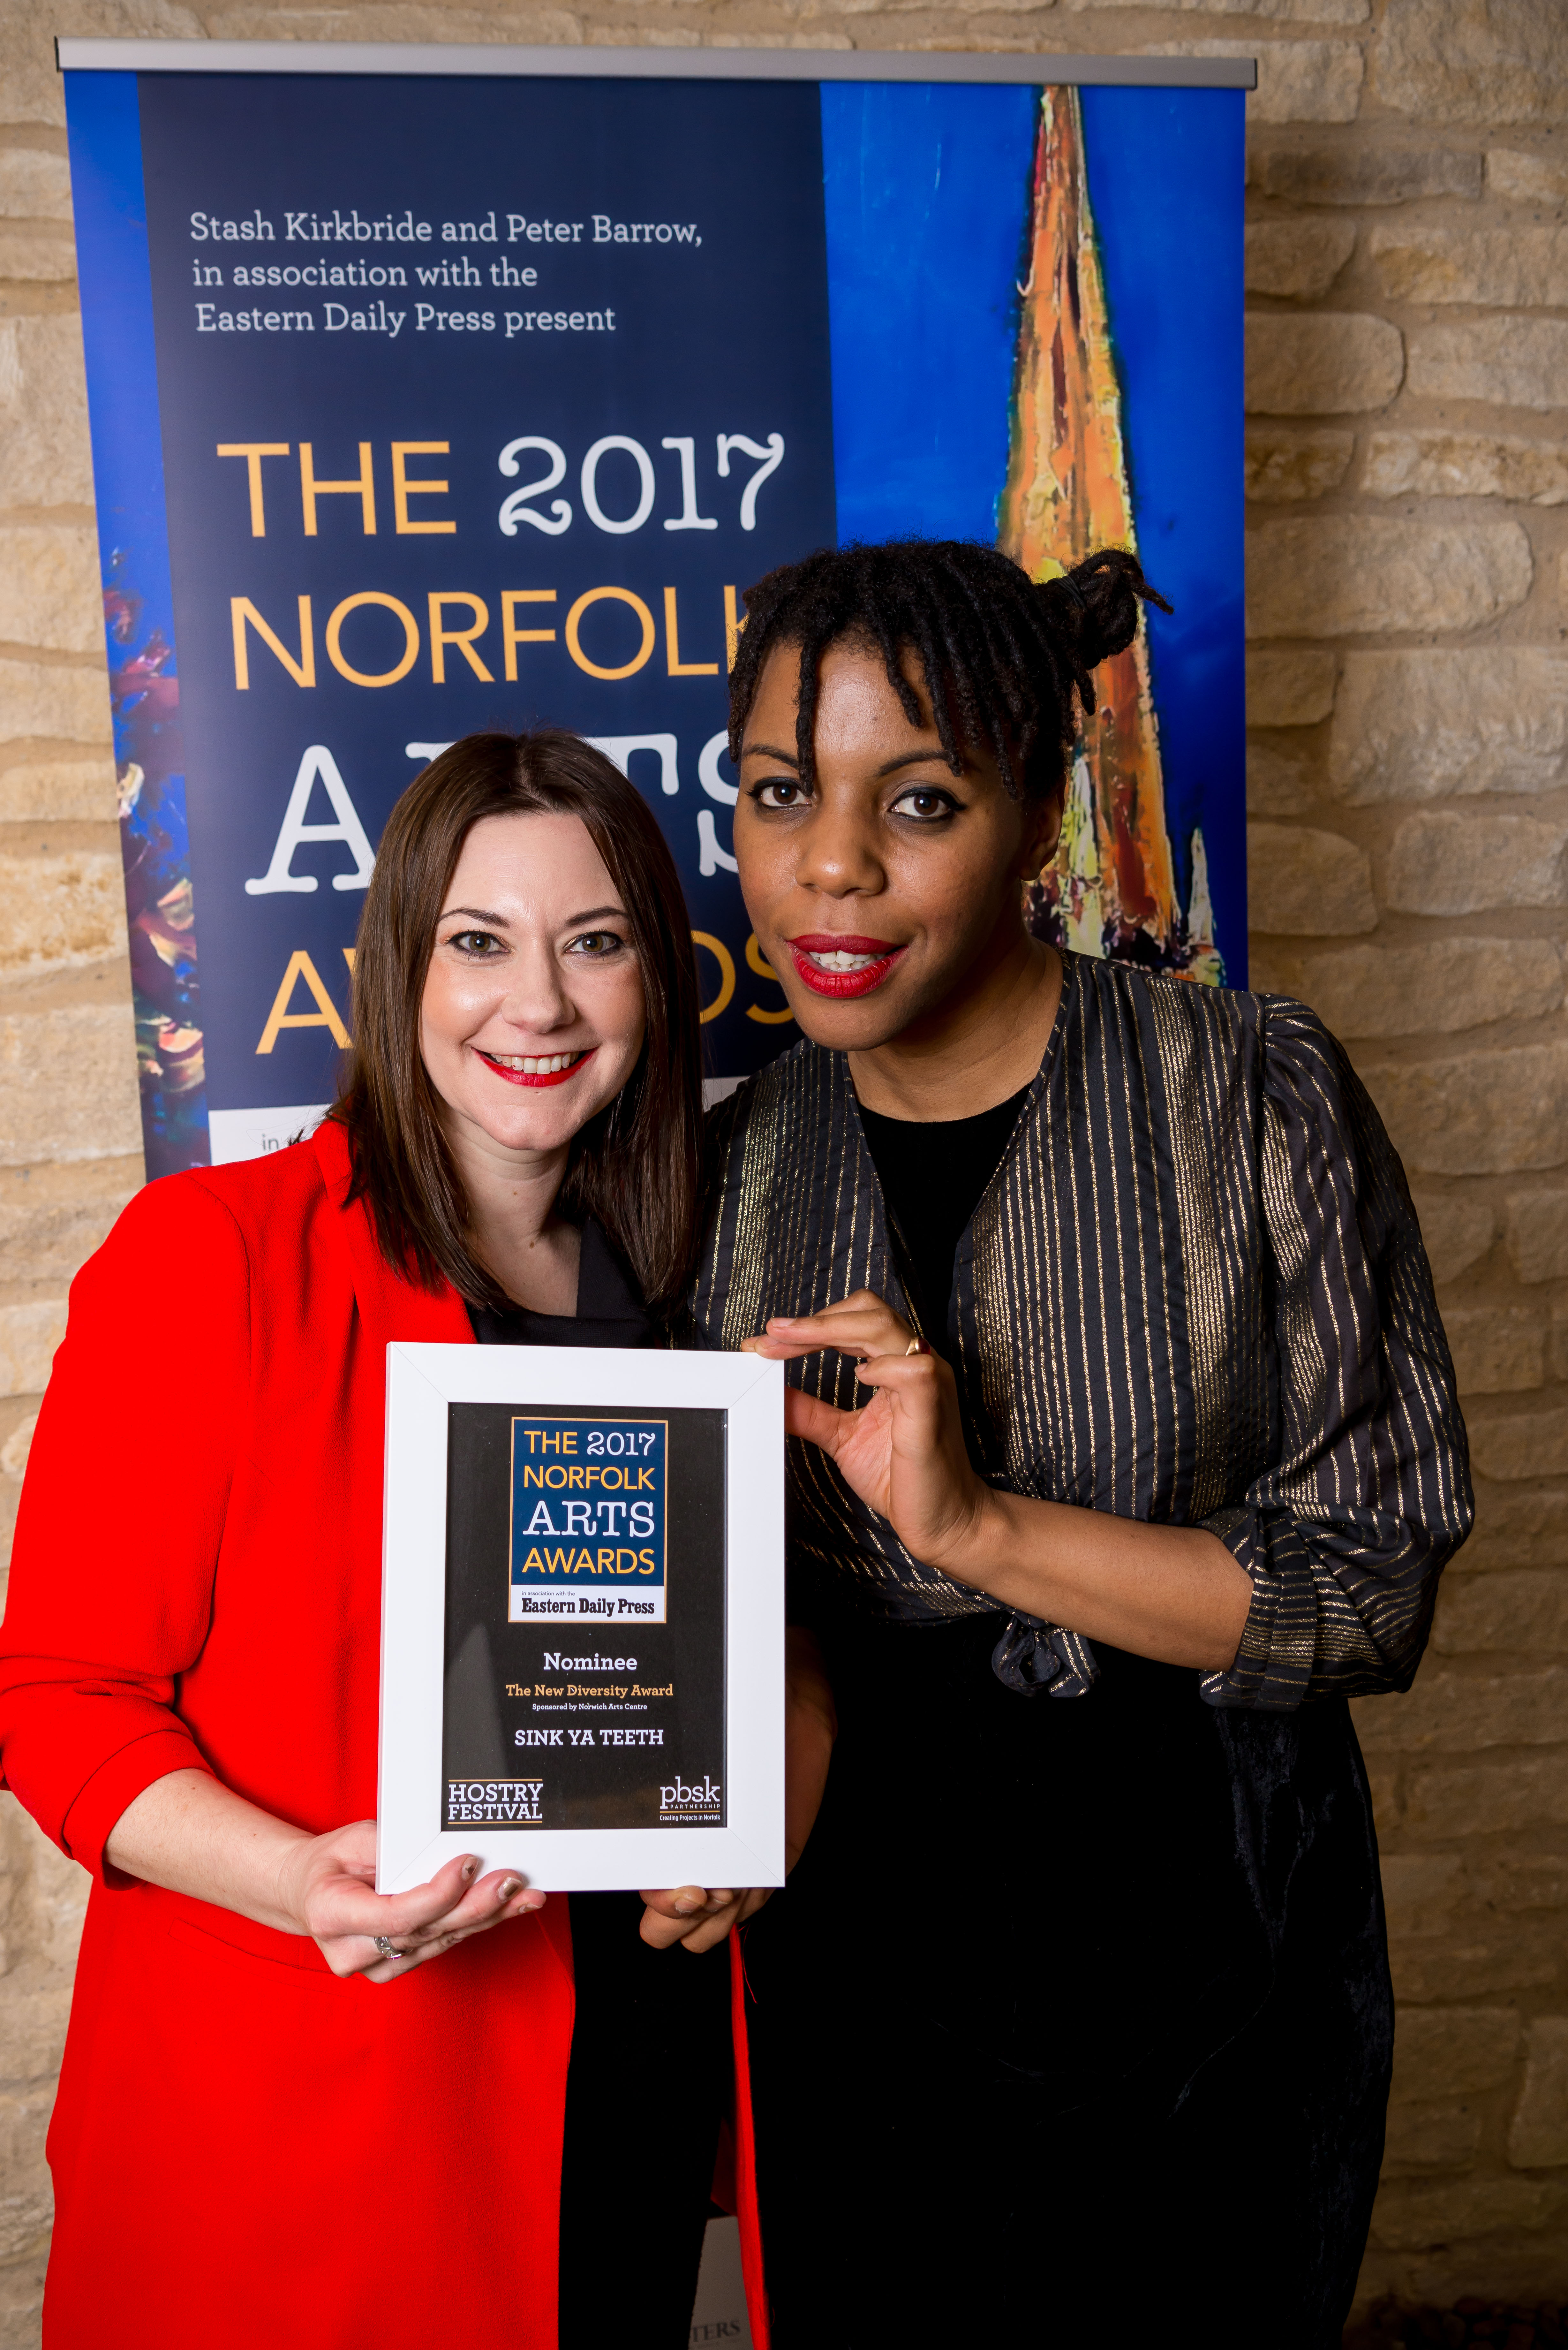 Norfolk Arts Awards 2017 at The Hostry at Norwich Cathedral. Photo credit ©Simon Finlay Photography.